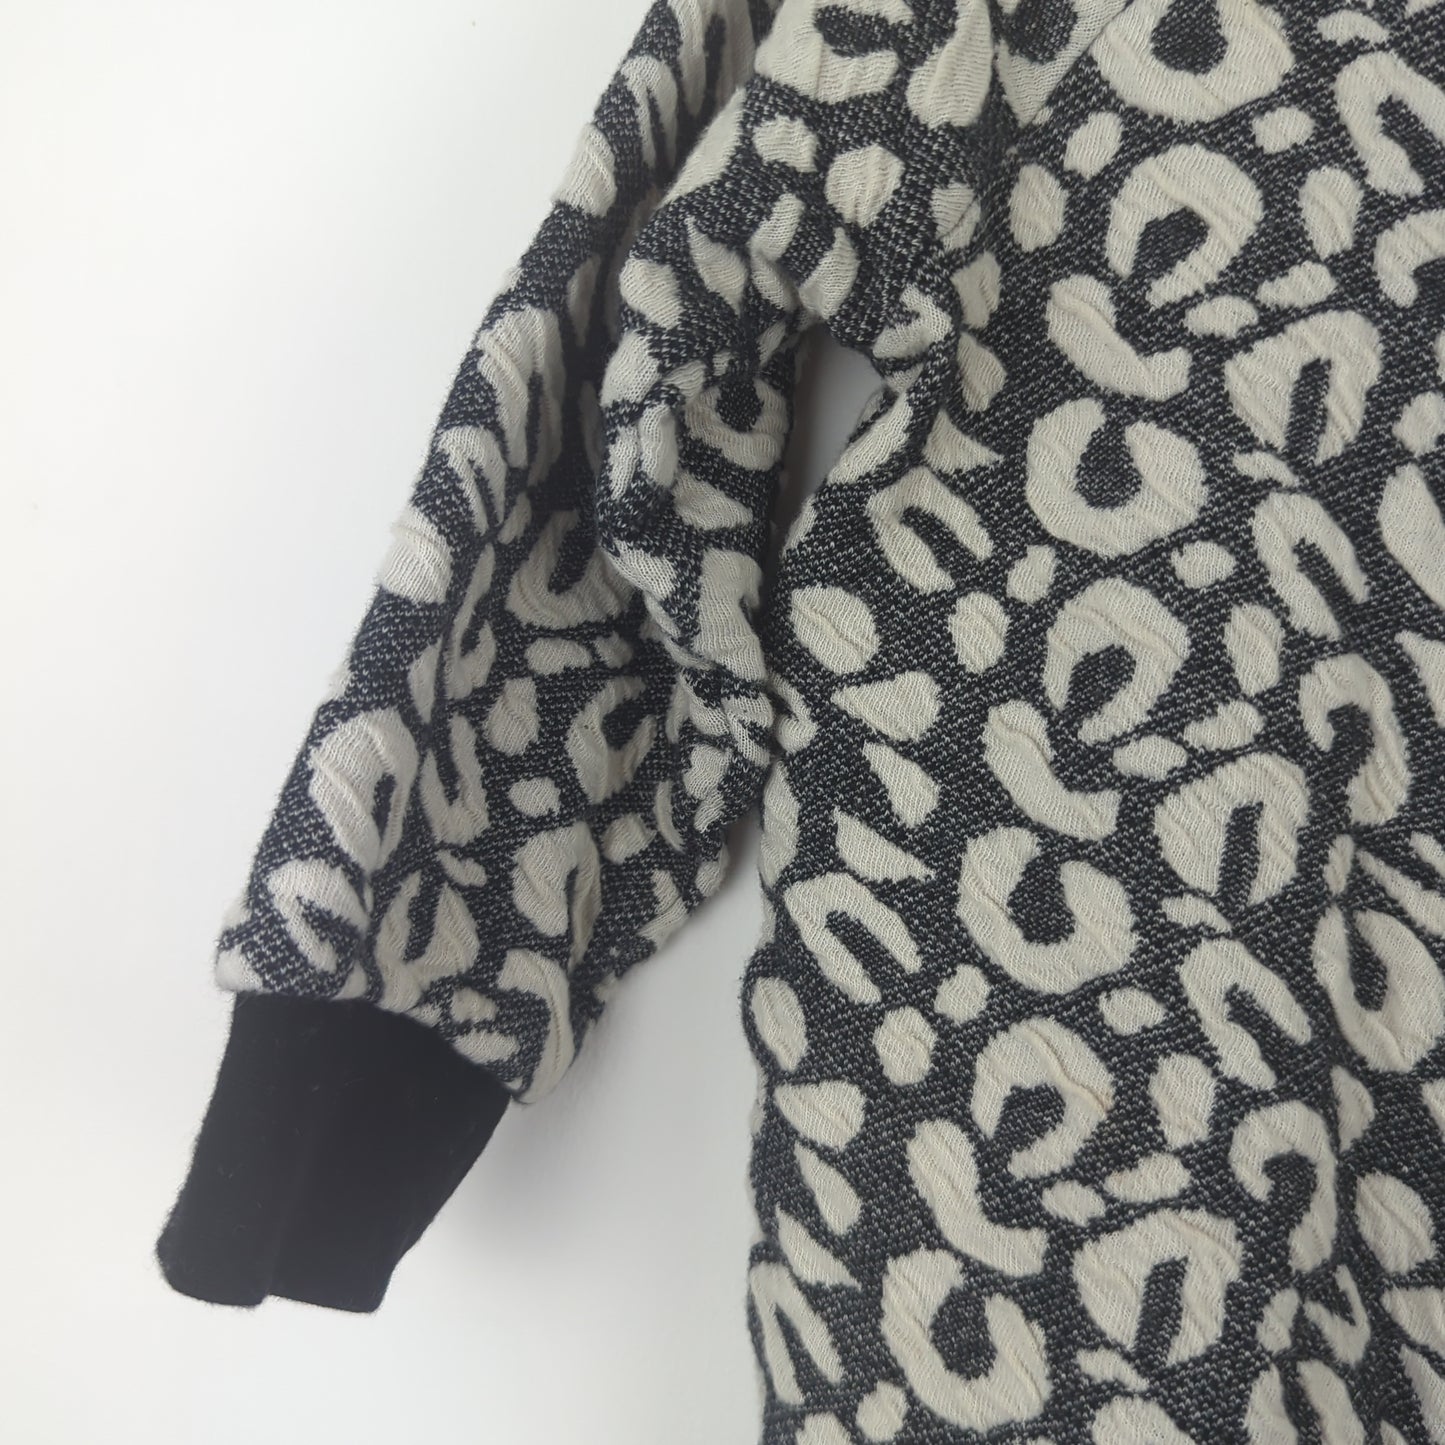 Preloved Turtledove Zip up Sweater - Leopard Jacquard (2-3yrs)